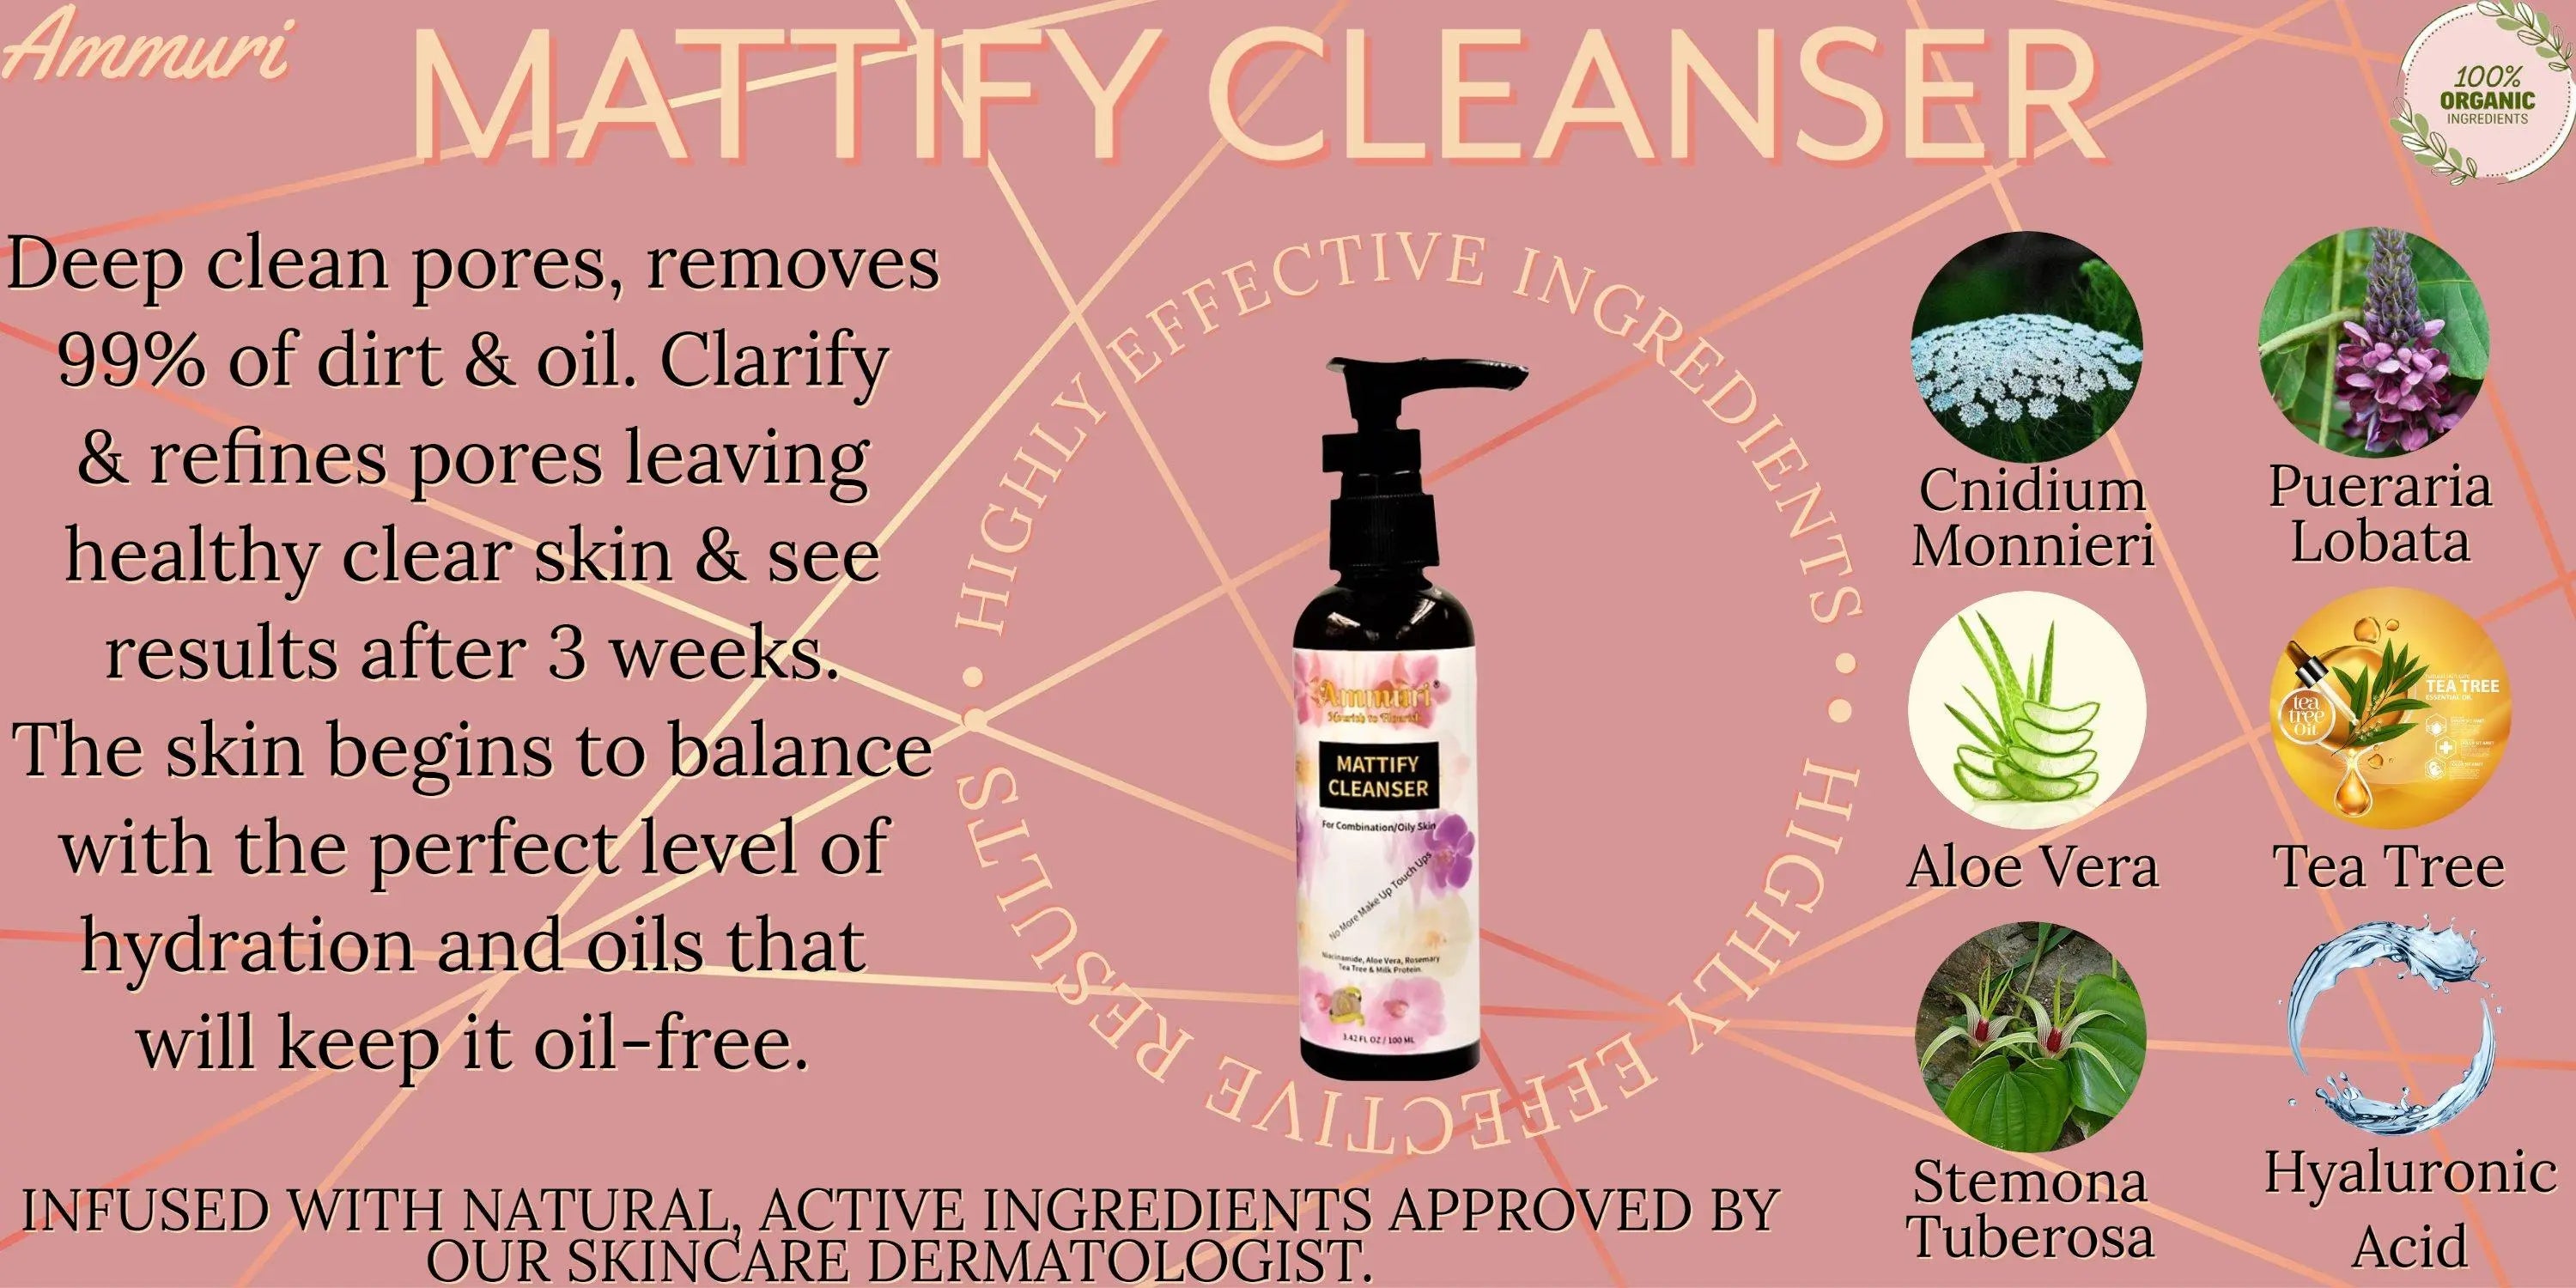 Ammuri Mattify Cleanser Face Wash Niacinamide, Tea Tree Oil, Aloe Vera & Milk Protein Ammuri Skincare